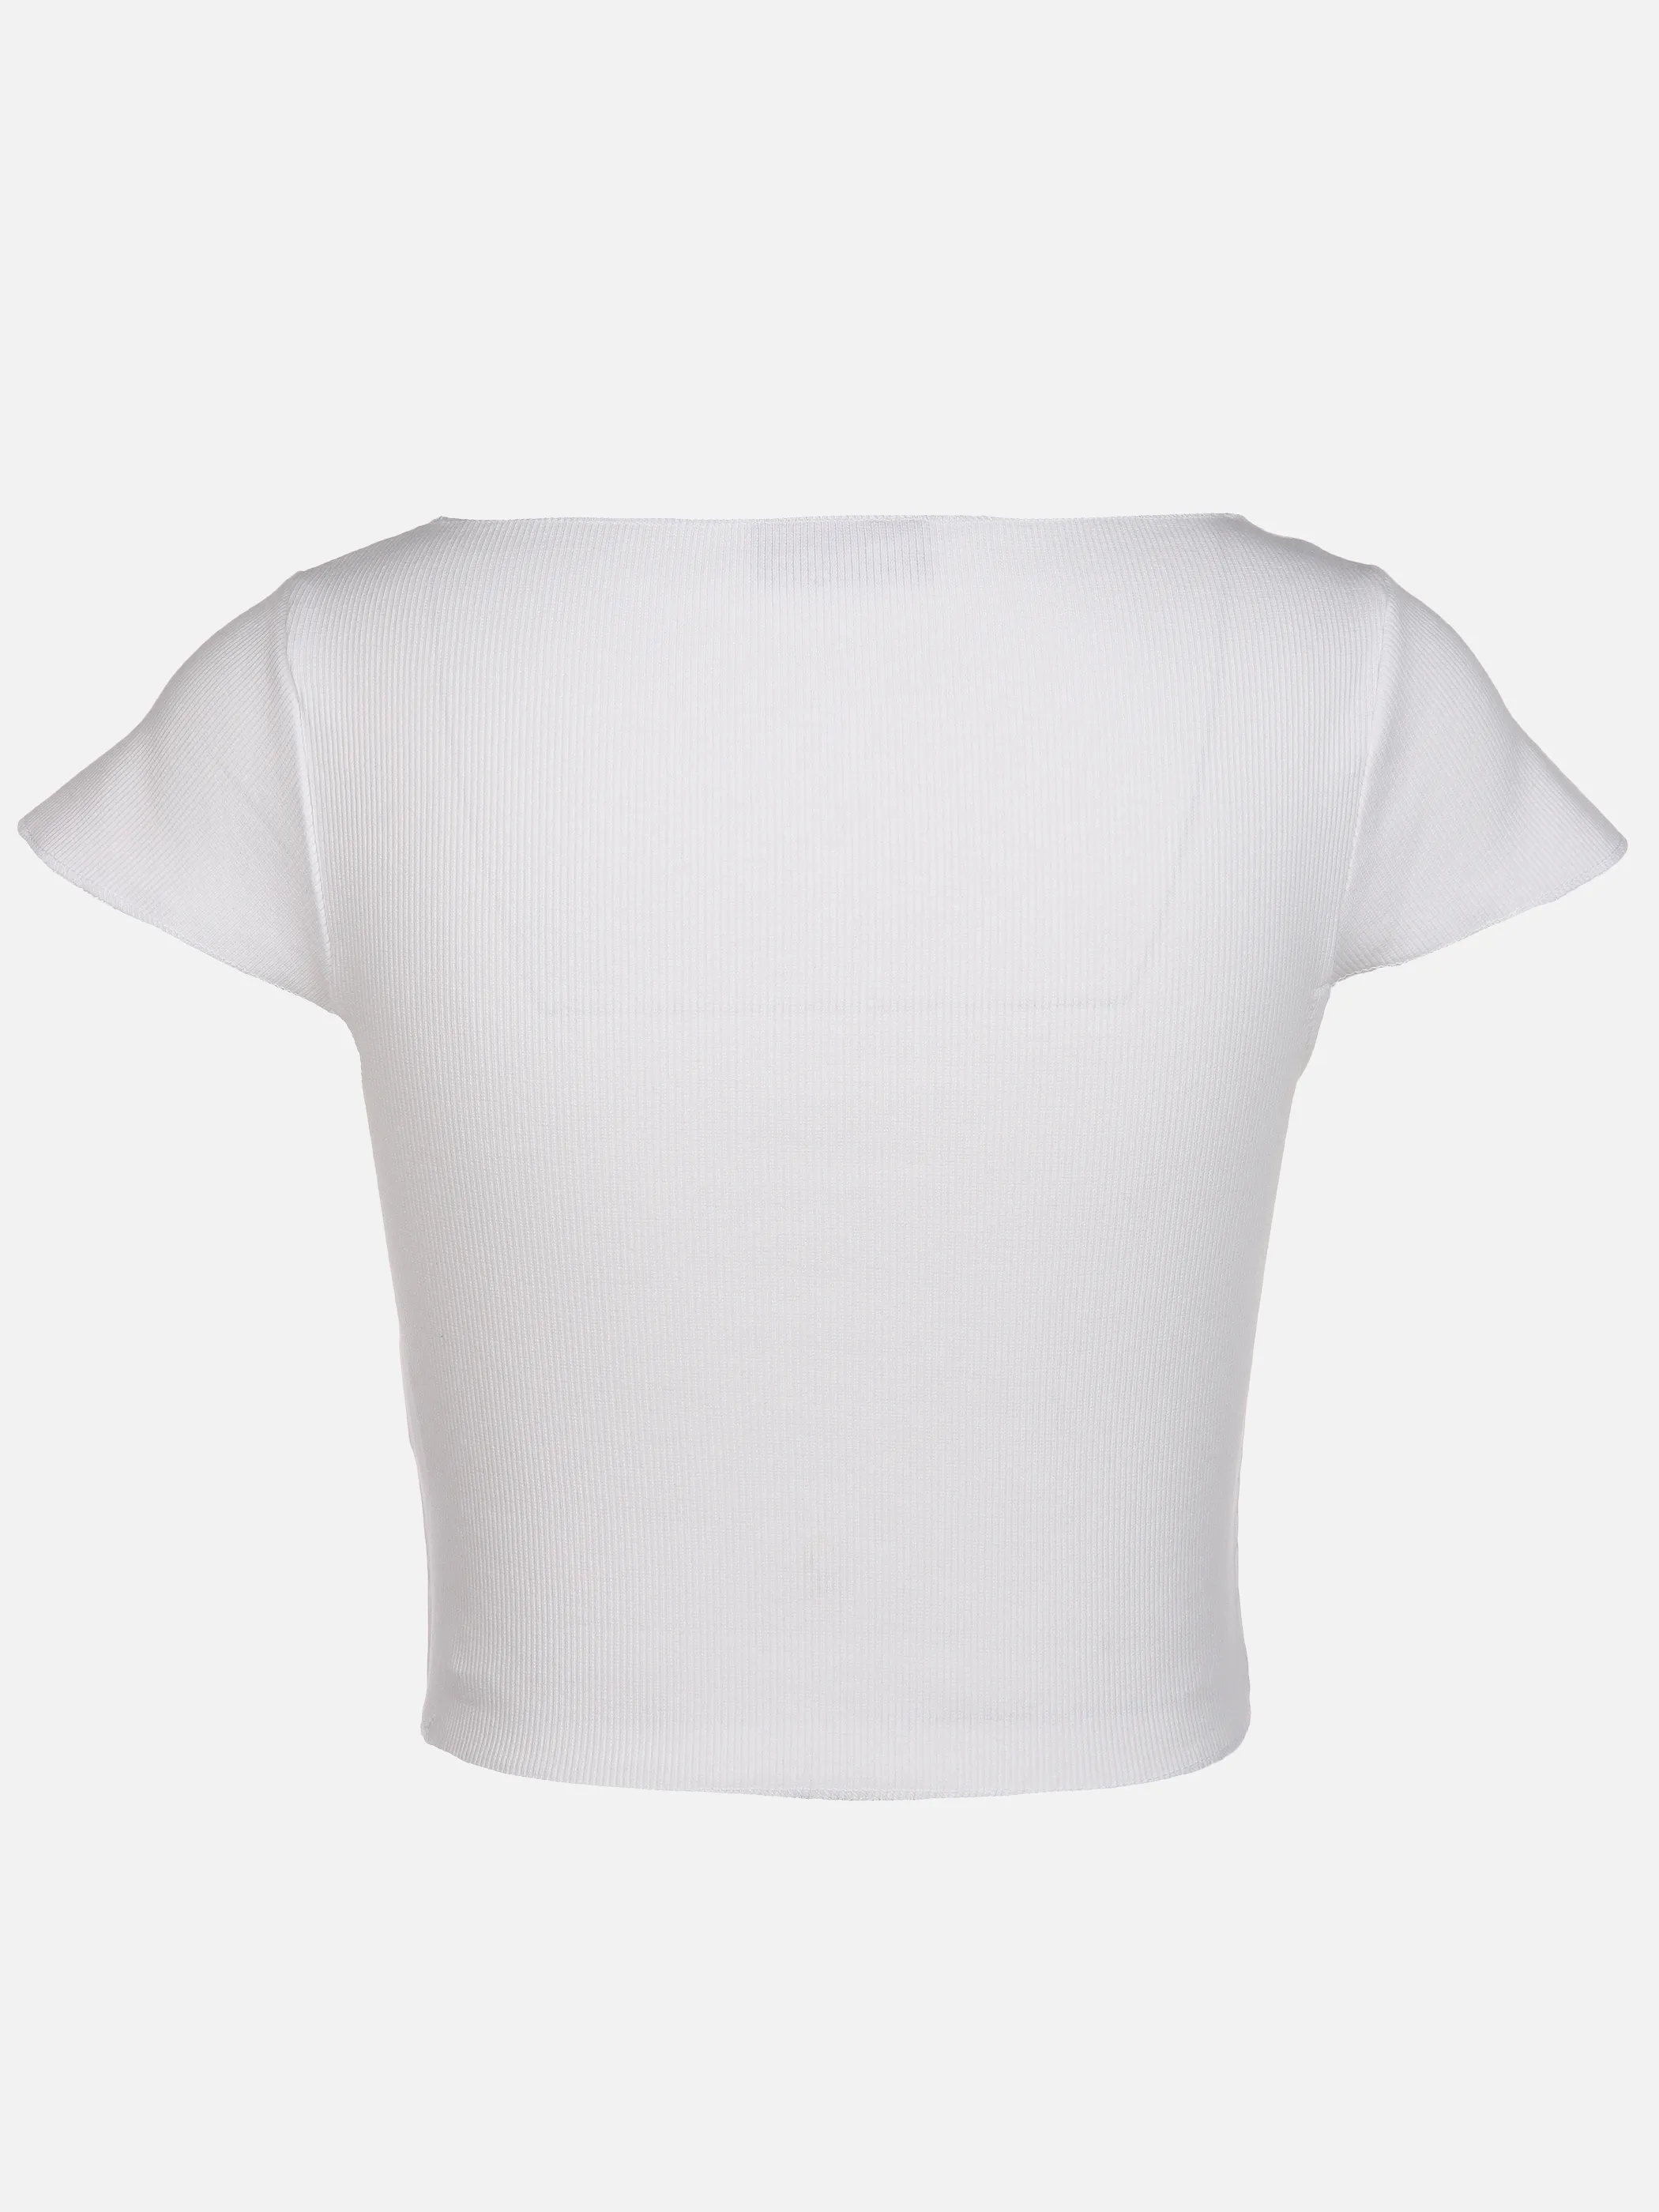 IX-O YF- Da T-Shirt Weiß 890777 WHITE 2